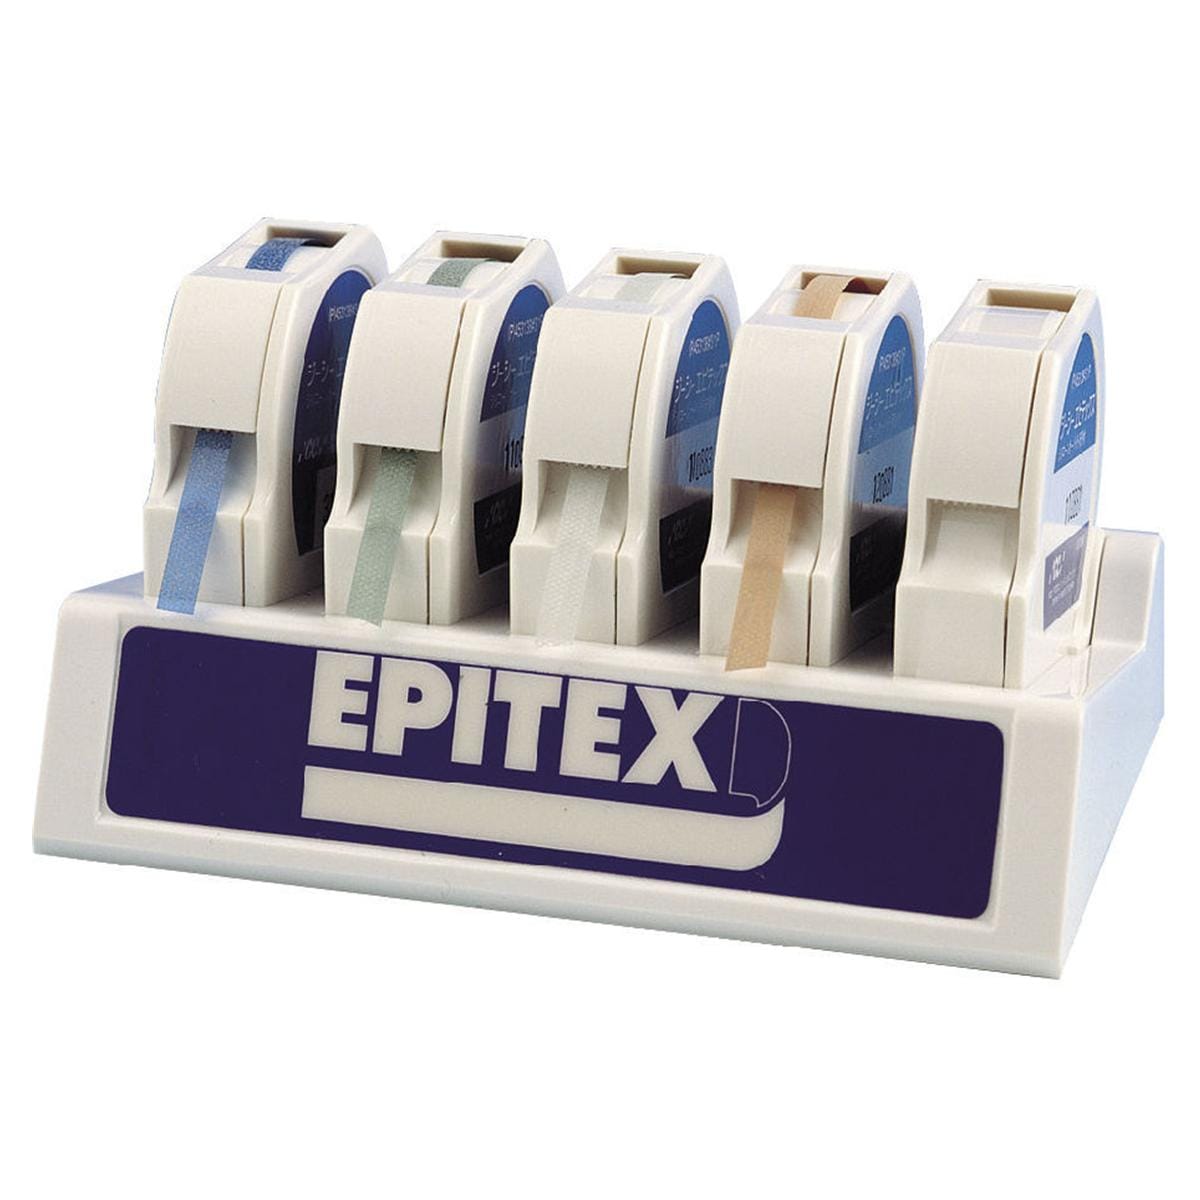 EPITEX EXTRA-SOTTILI - Grana grossa/colore blu